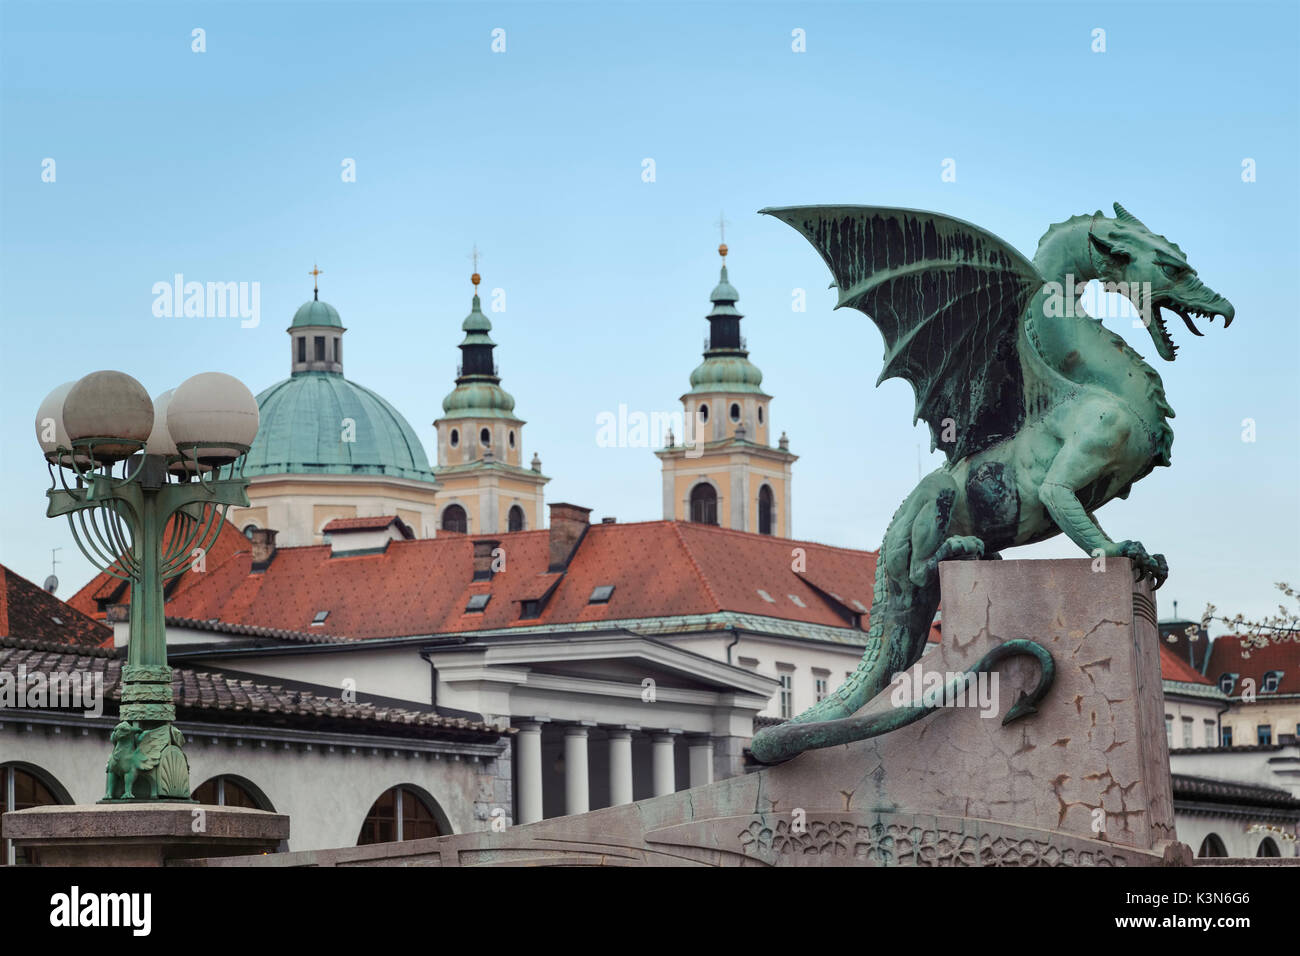 Europe, Slovenia, Ljubjana. The dragon bridge and the Cathedral of Saint Nicholas Stock Photo